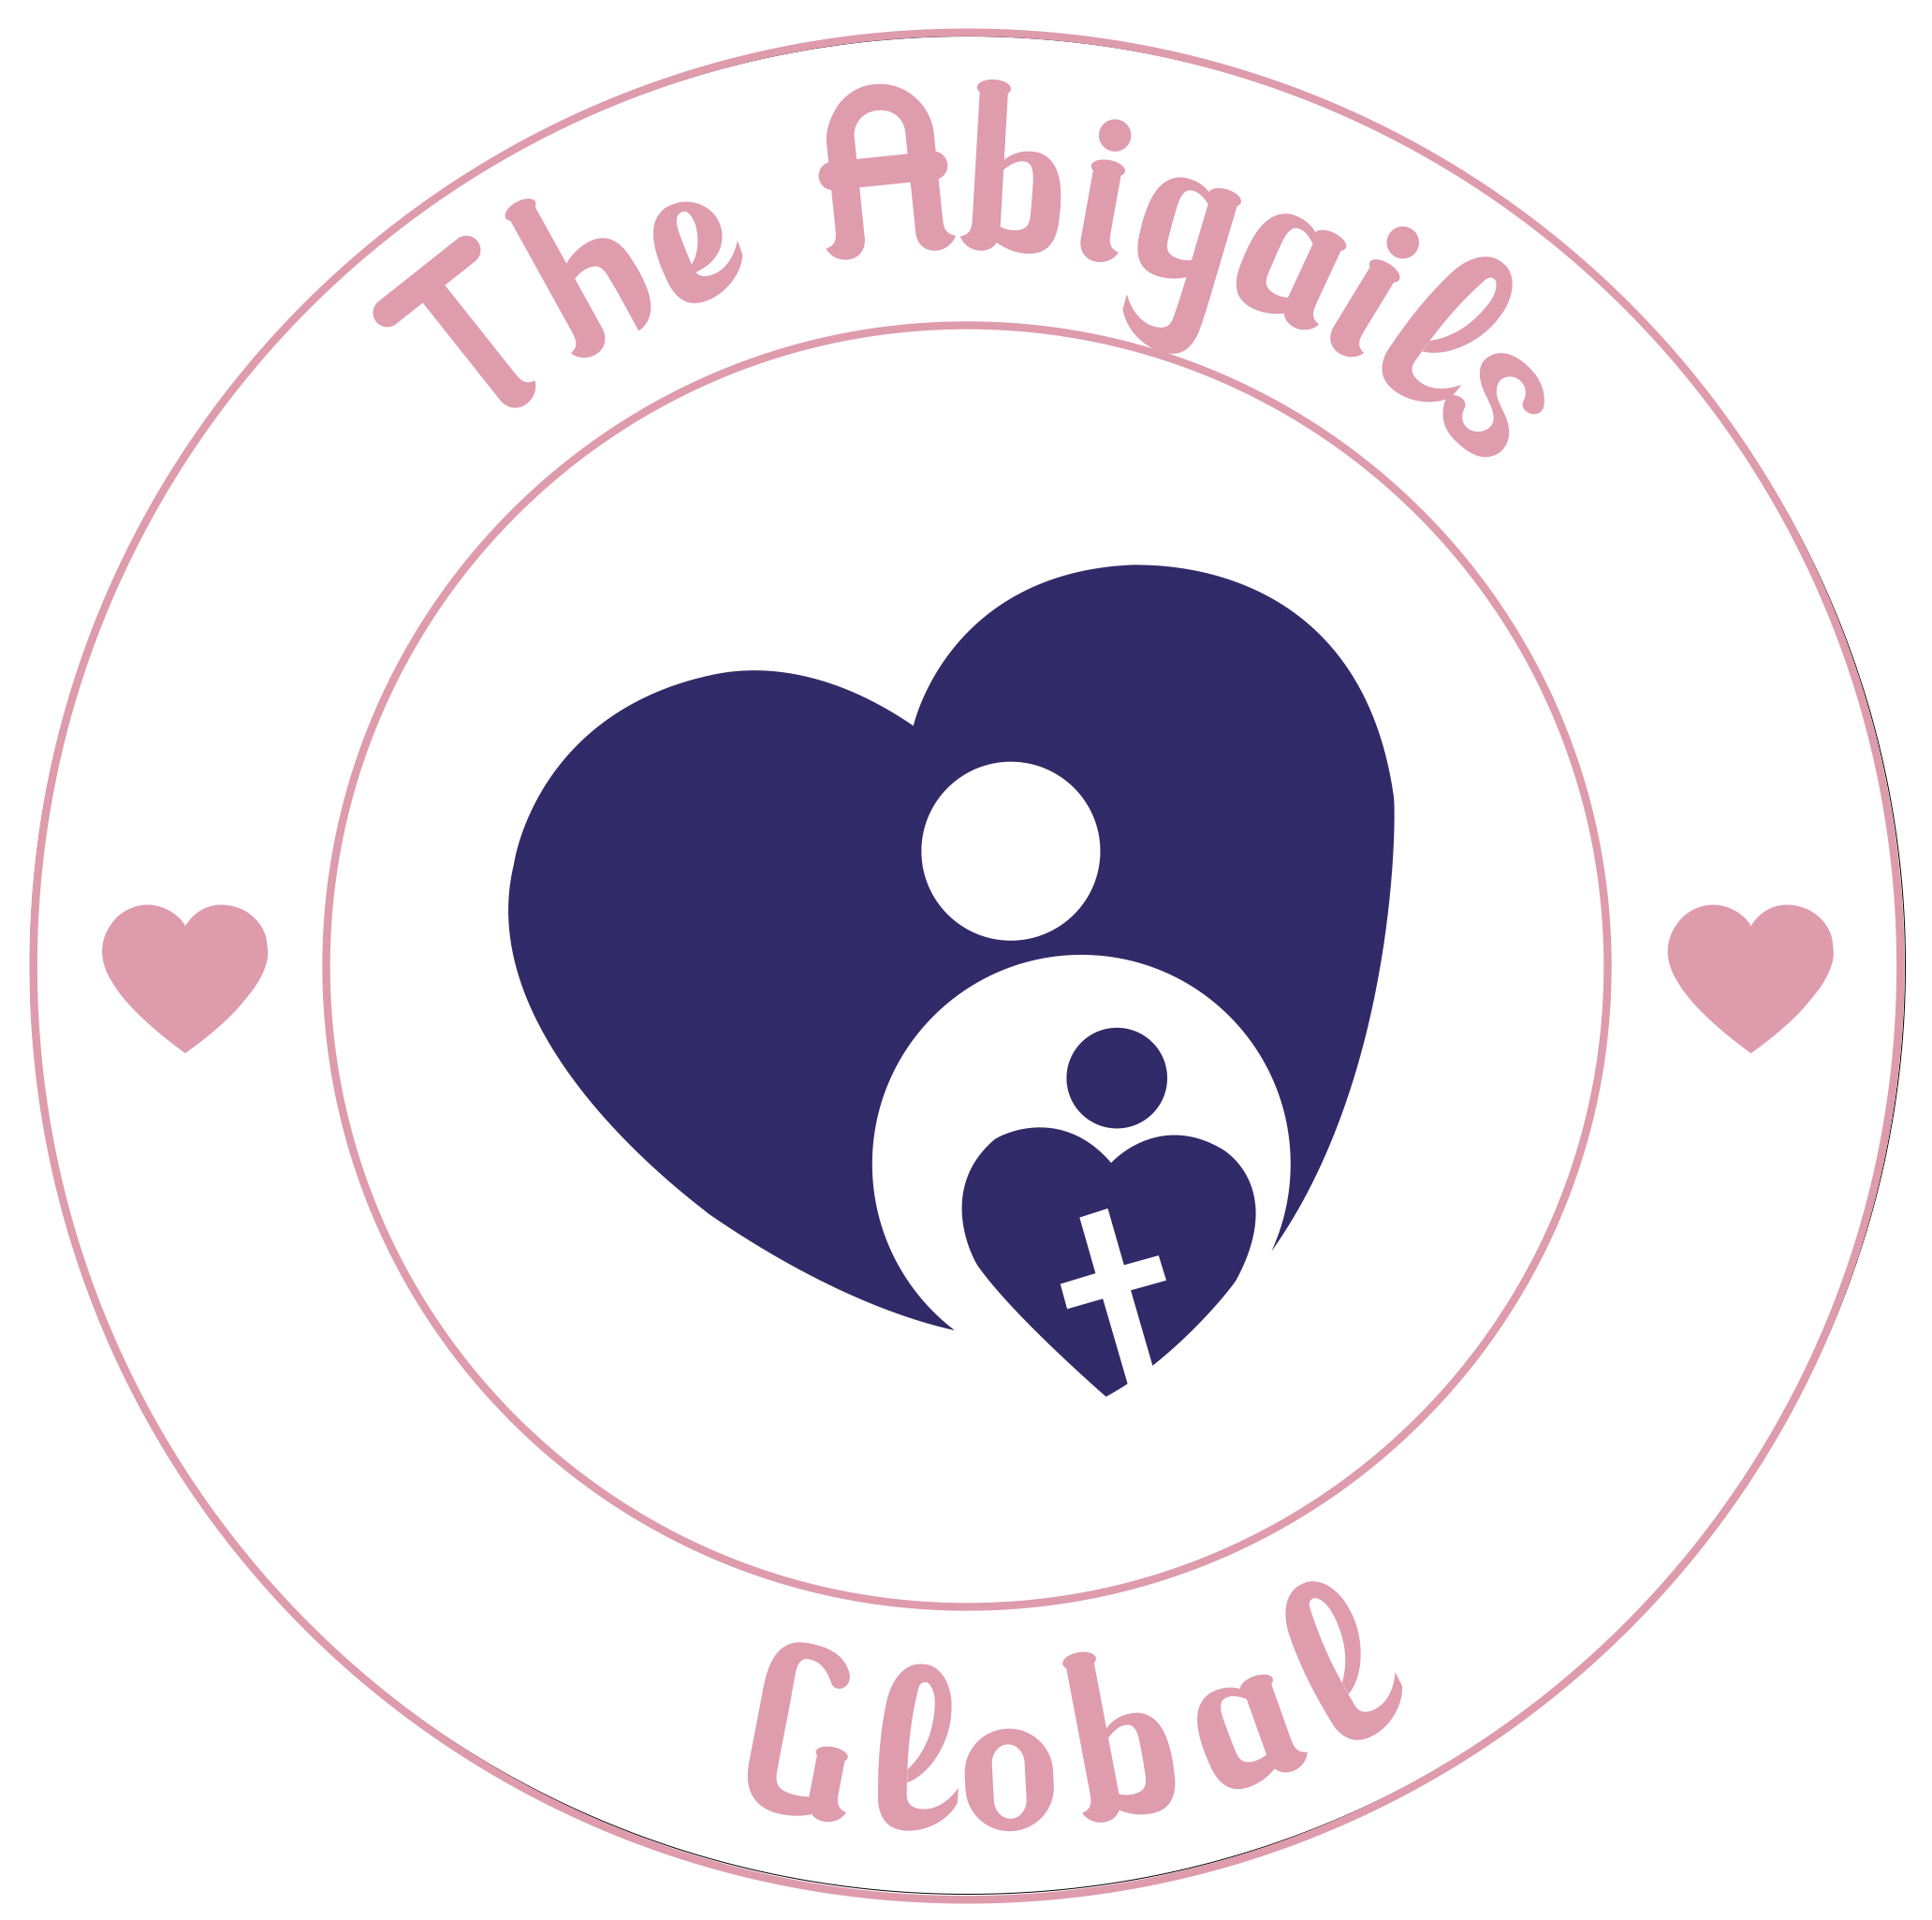 The Abigails